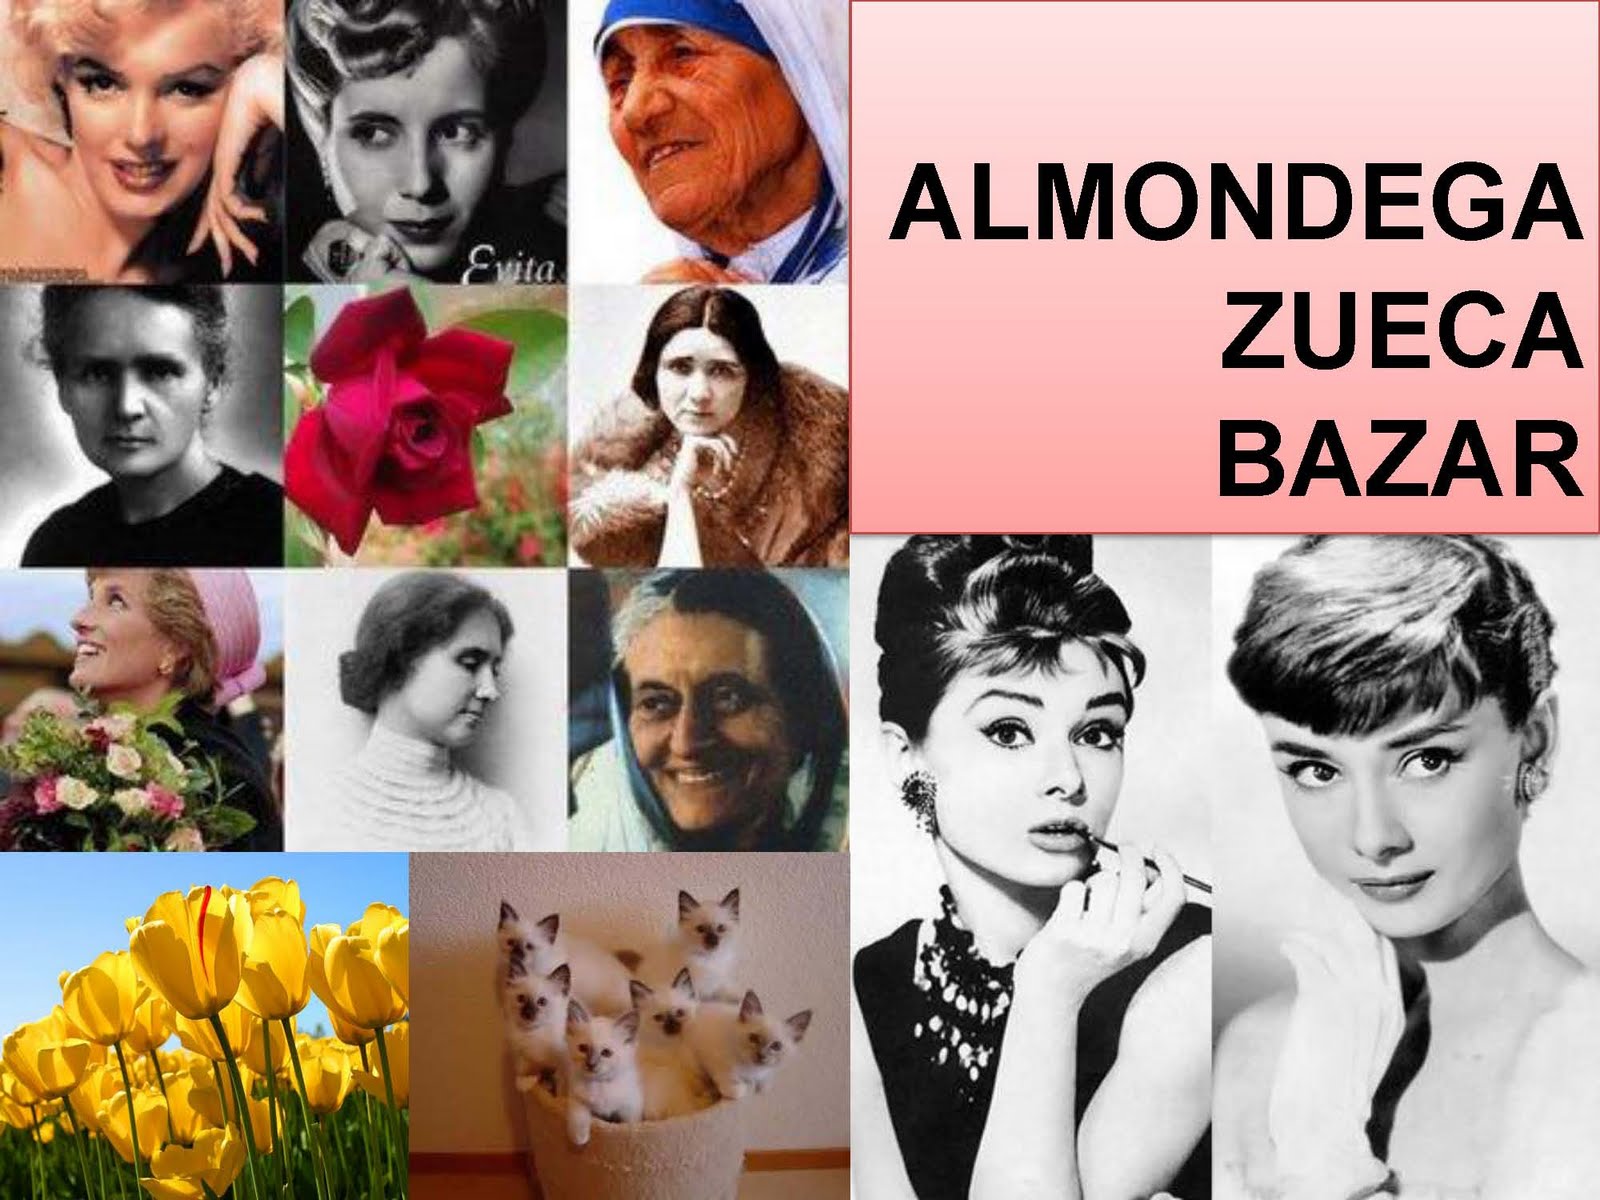 Almondega Zueca Bazar